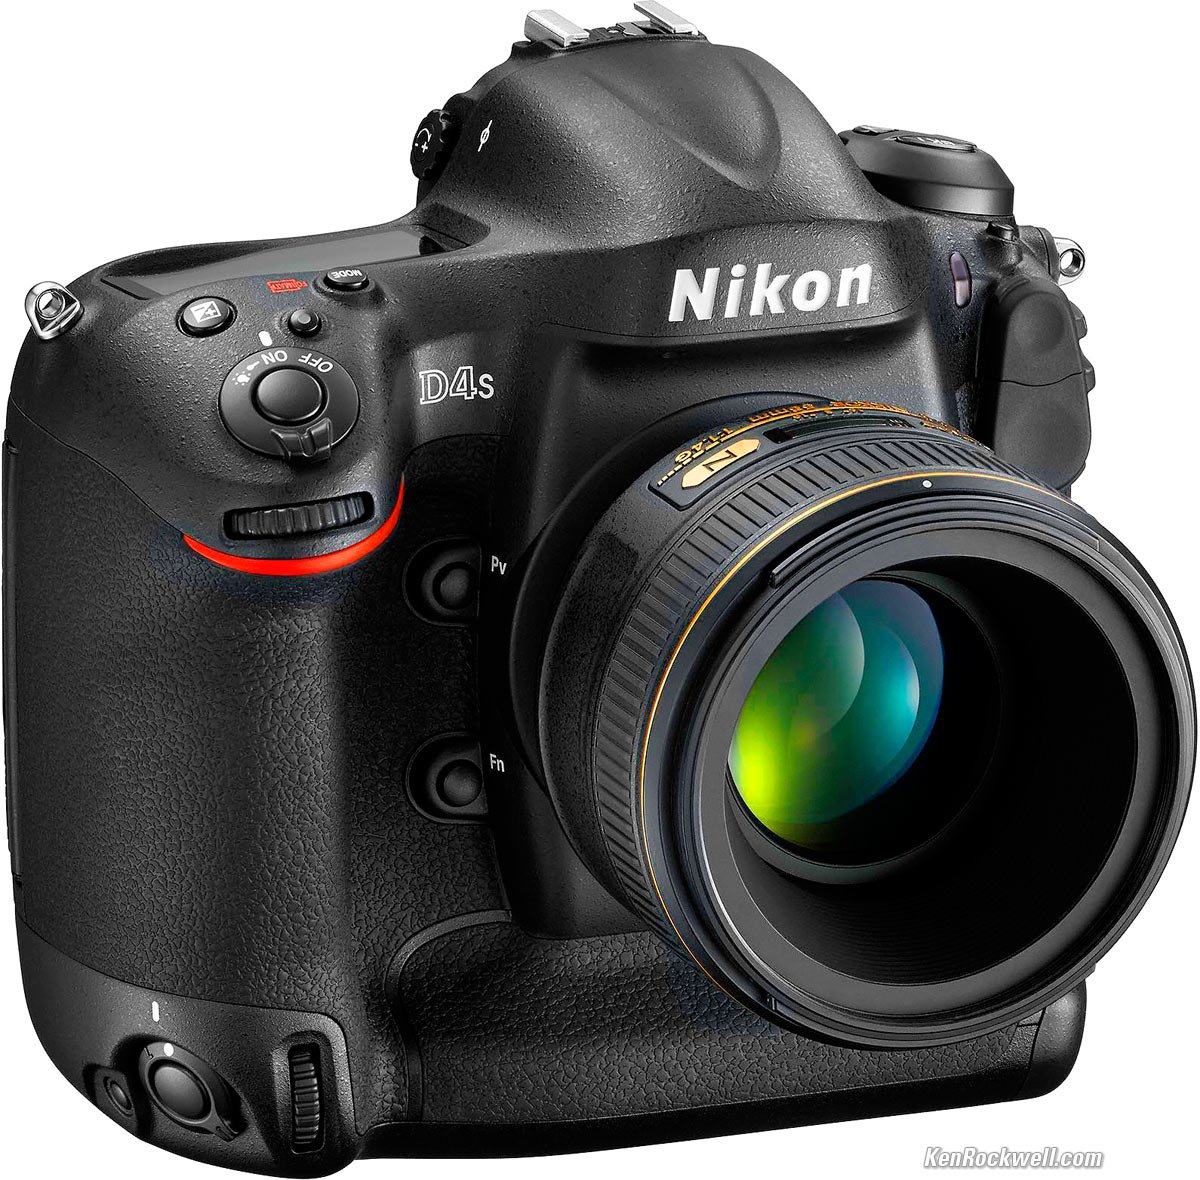 Nikon D4s Review